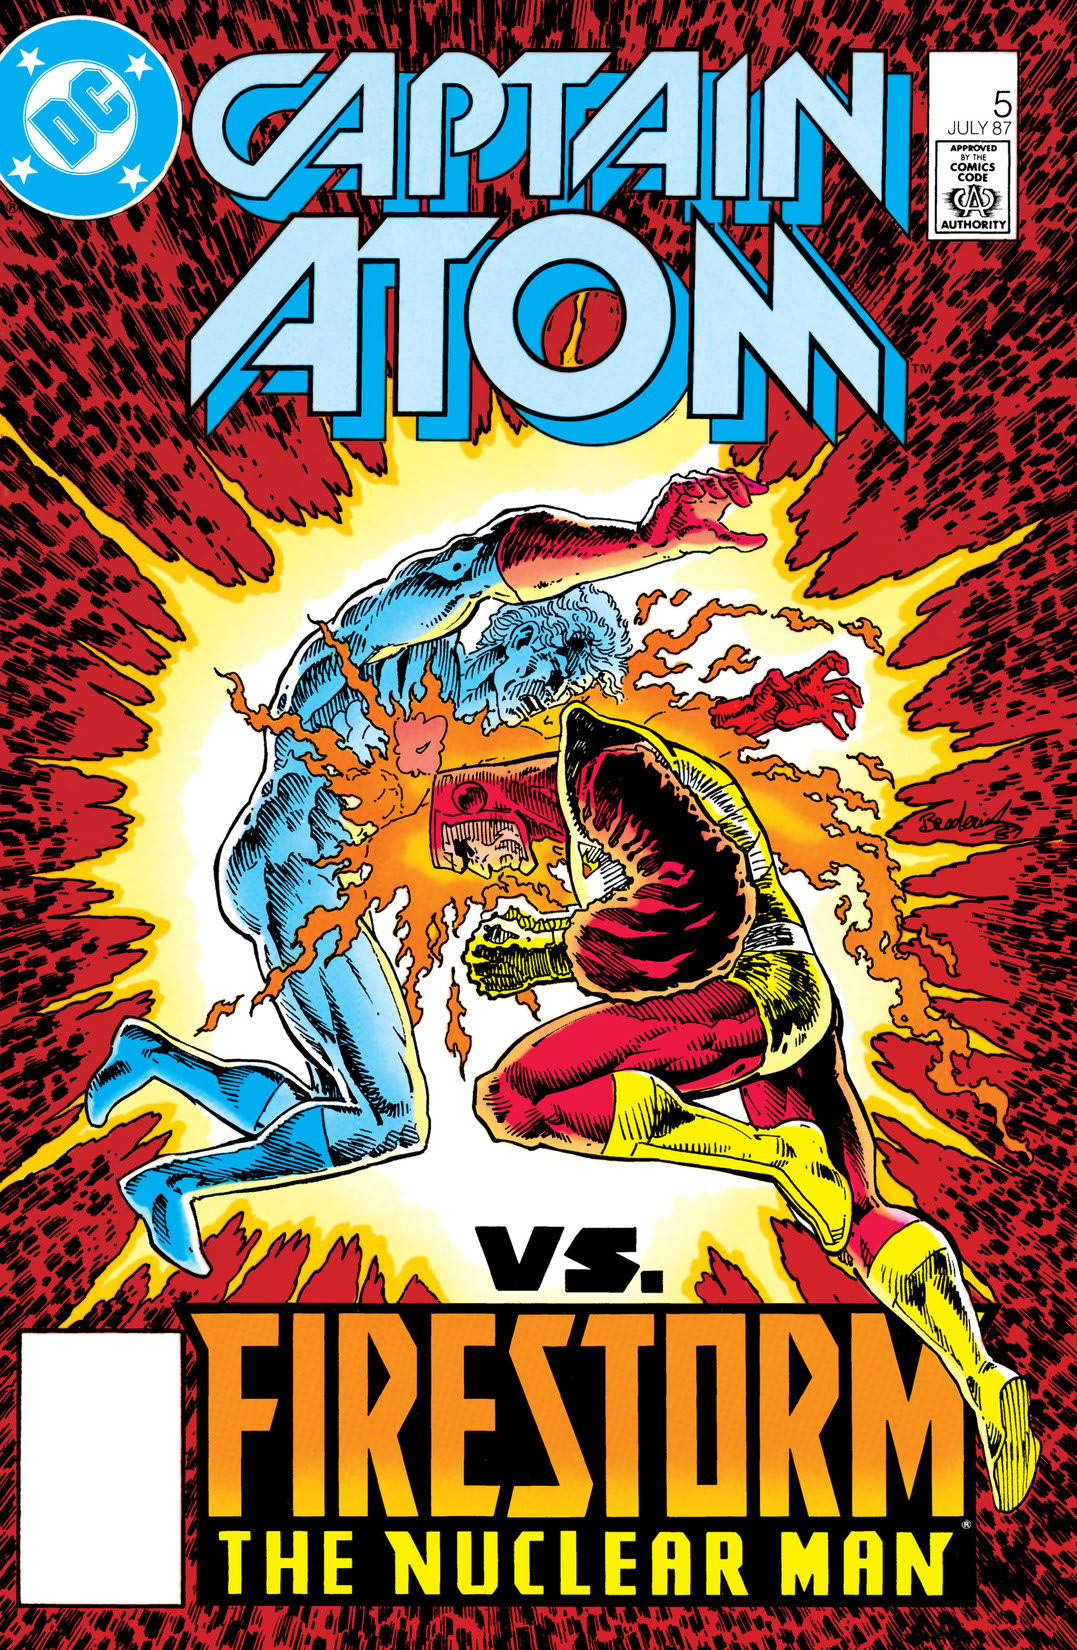 Captain Atom (1986-1992) #5 preview images